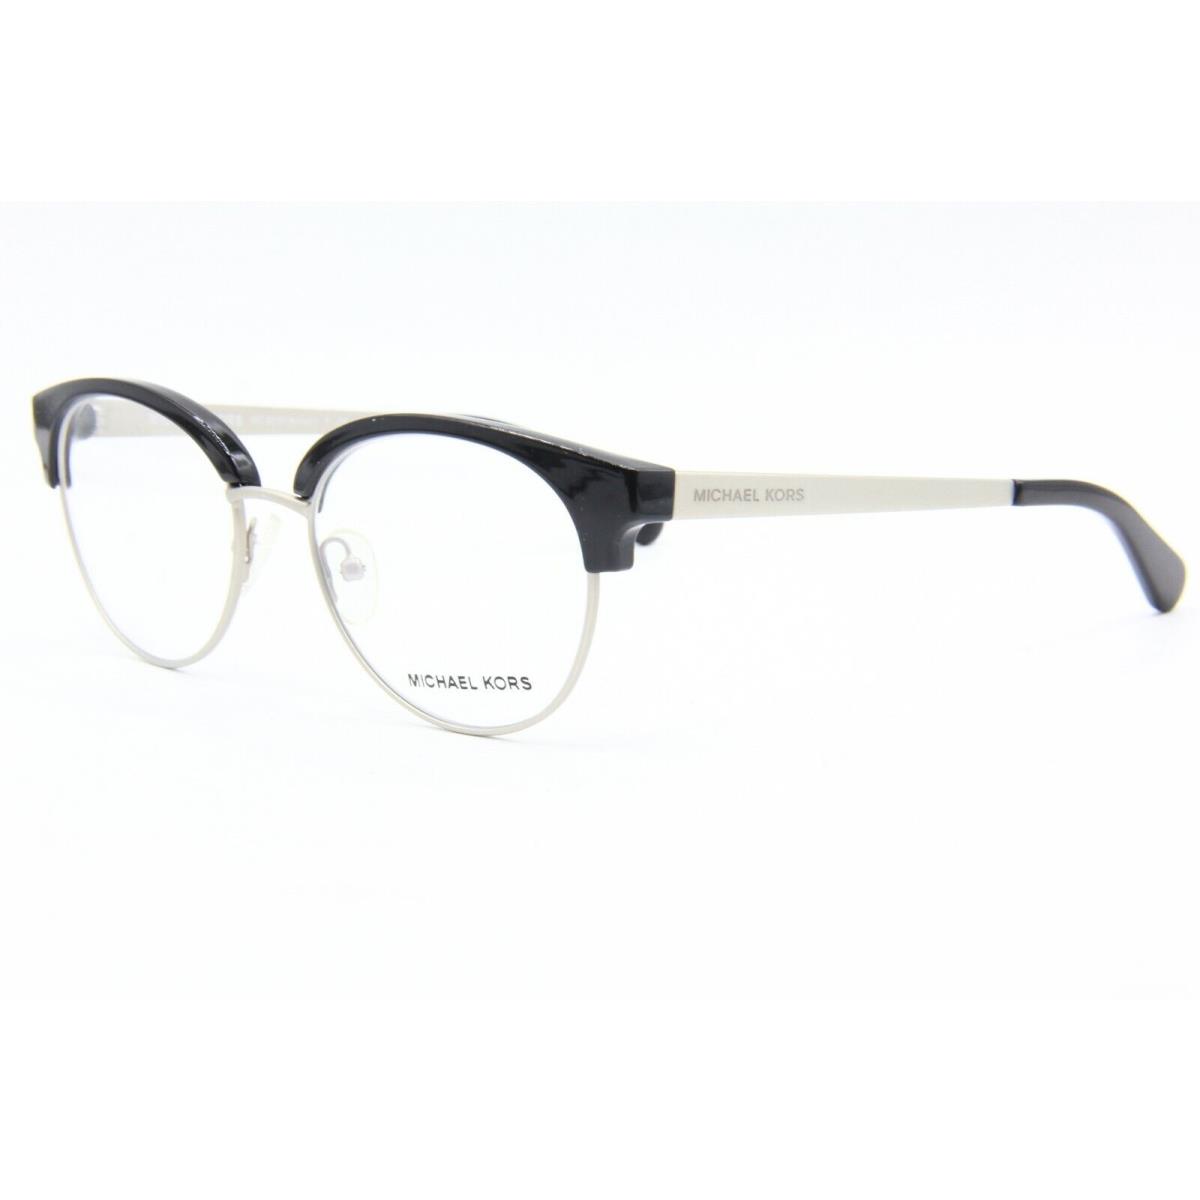 Michael Kors MK 3013 1142 Black Eyeglasses Frame MK3013 RX 52-17